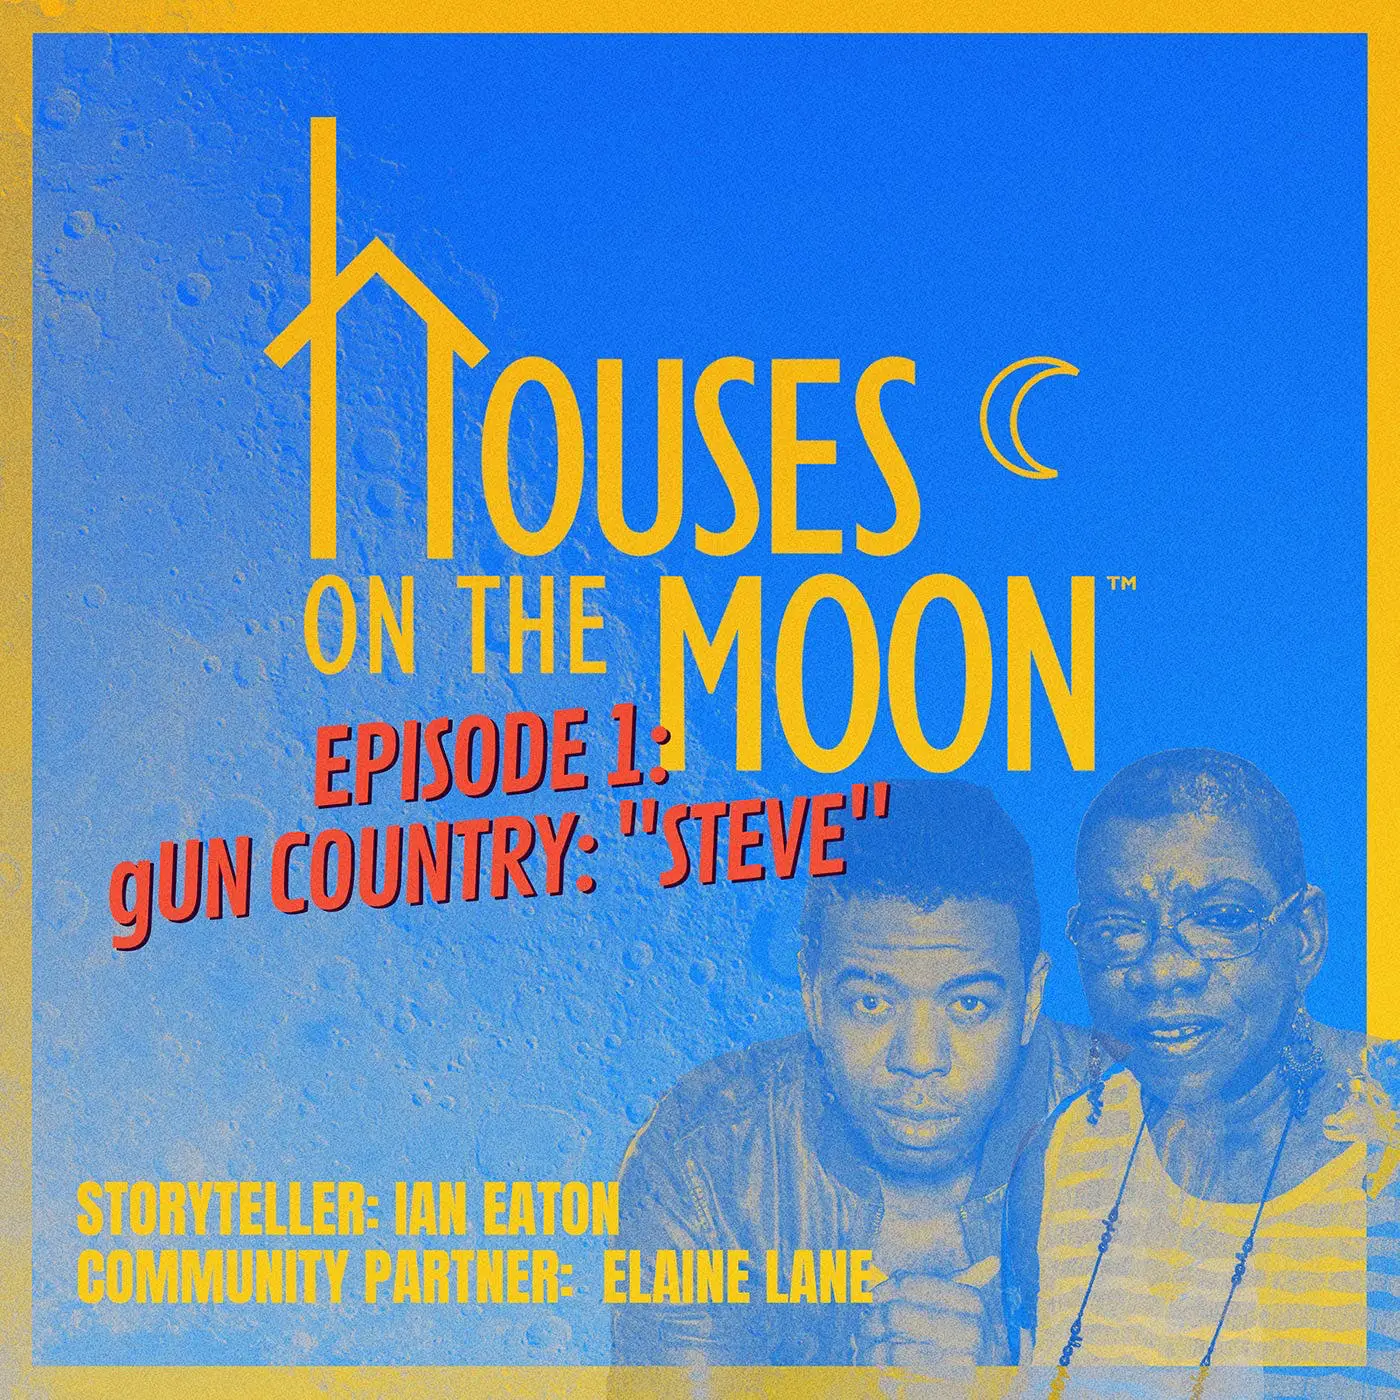 Podcast Episode #1: Steve